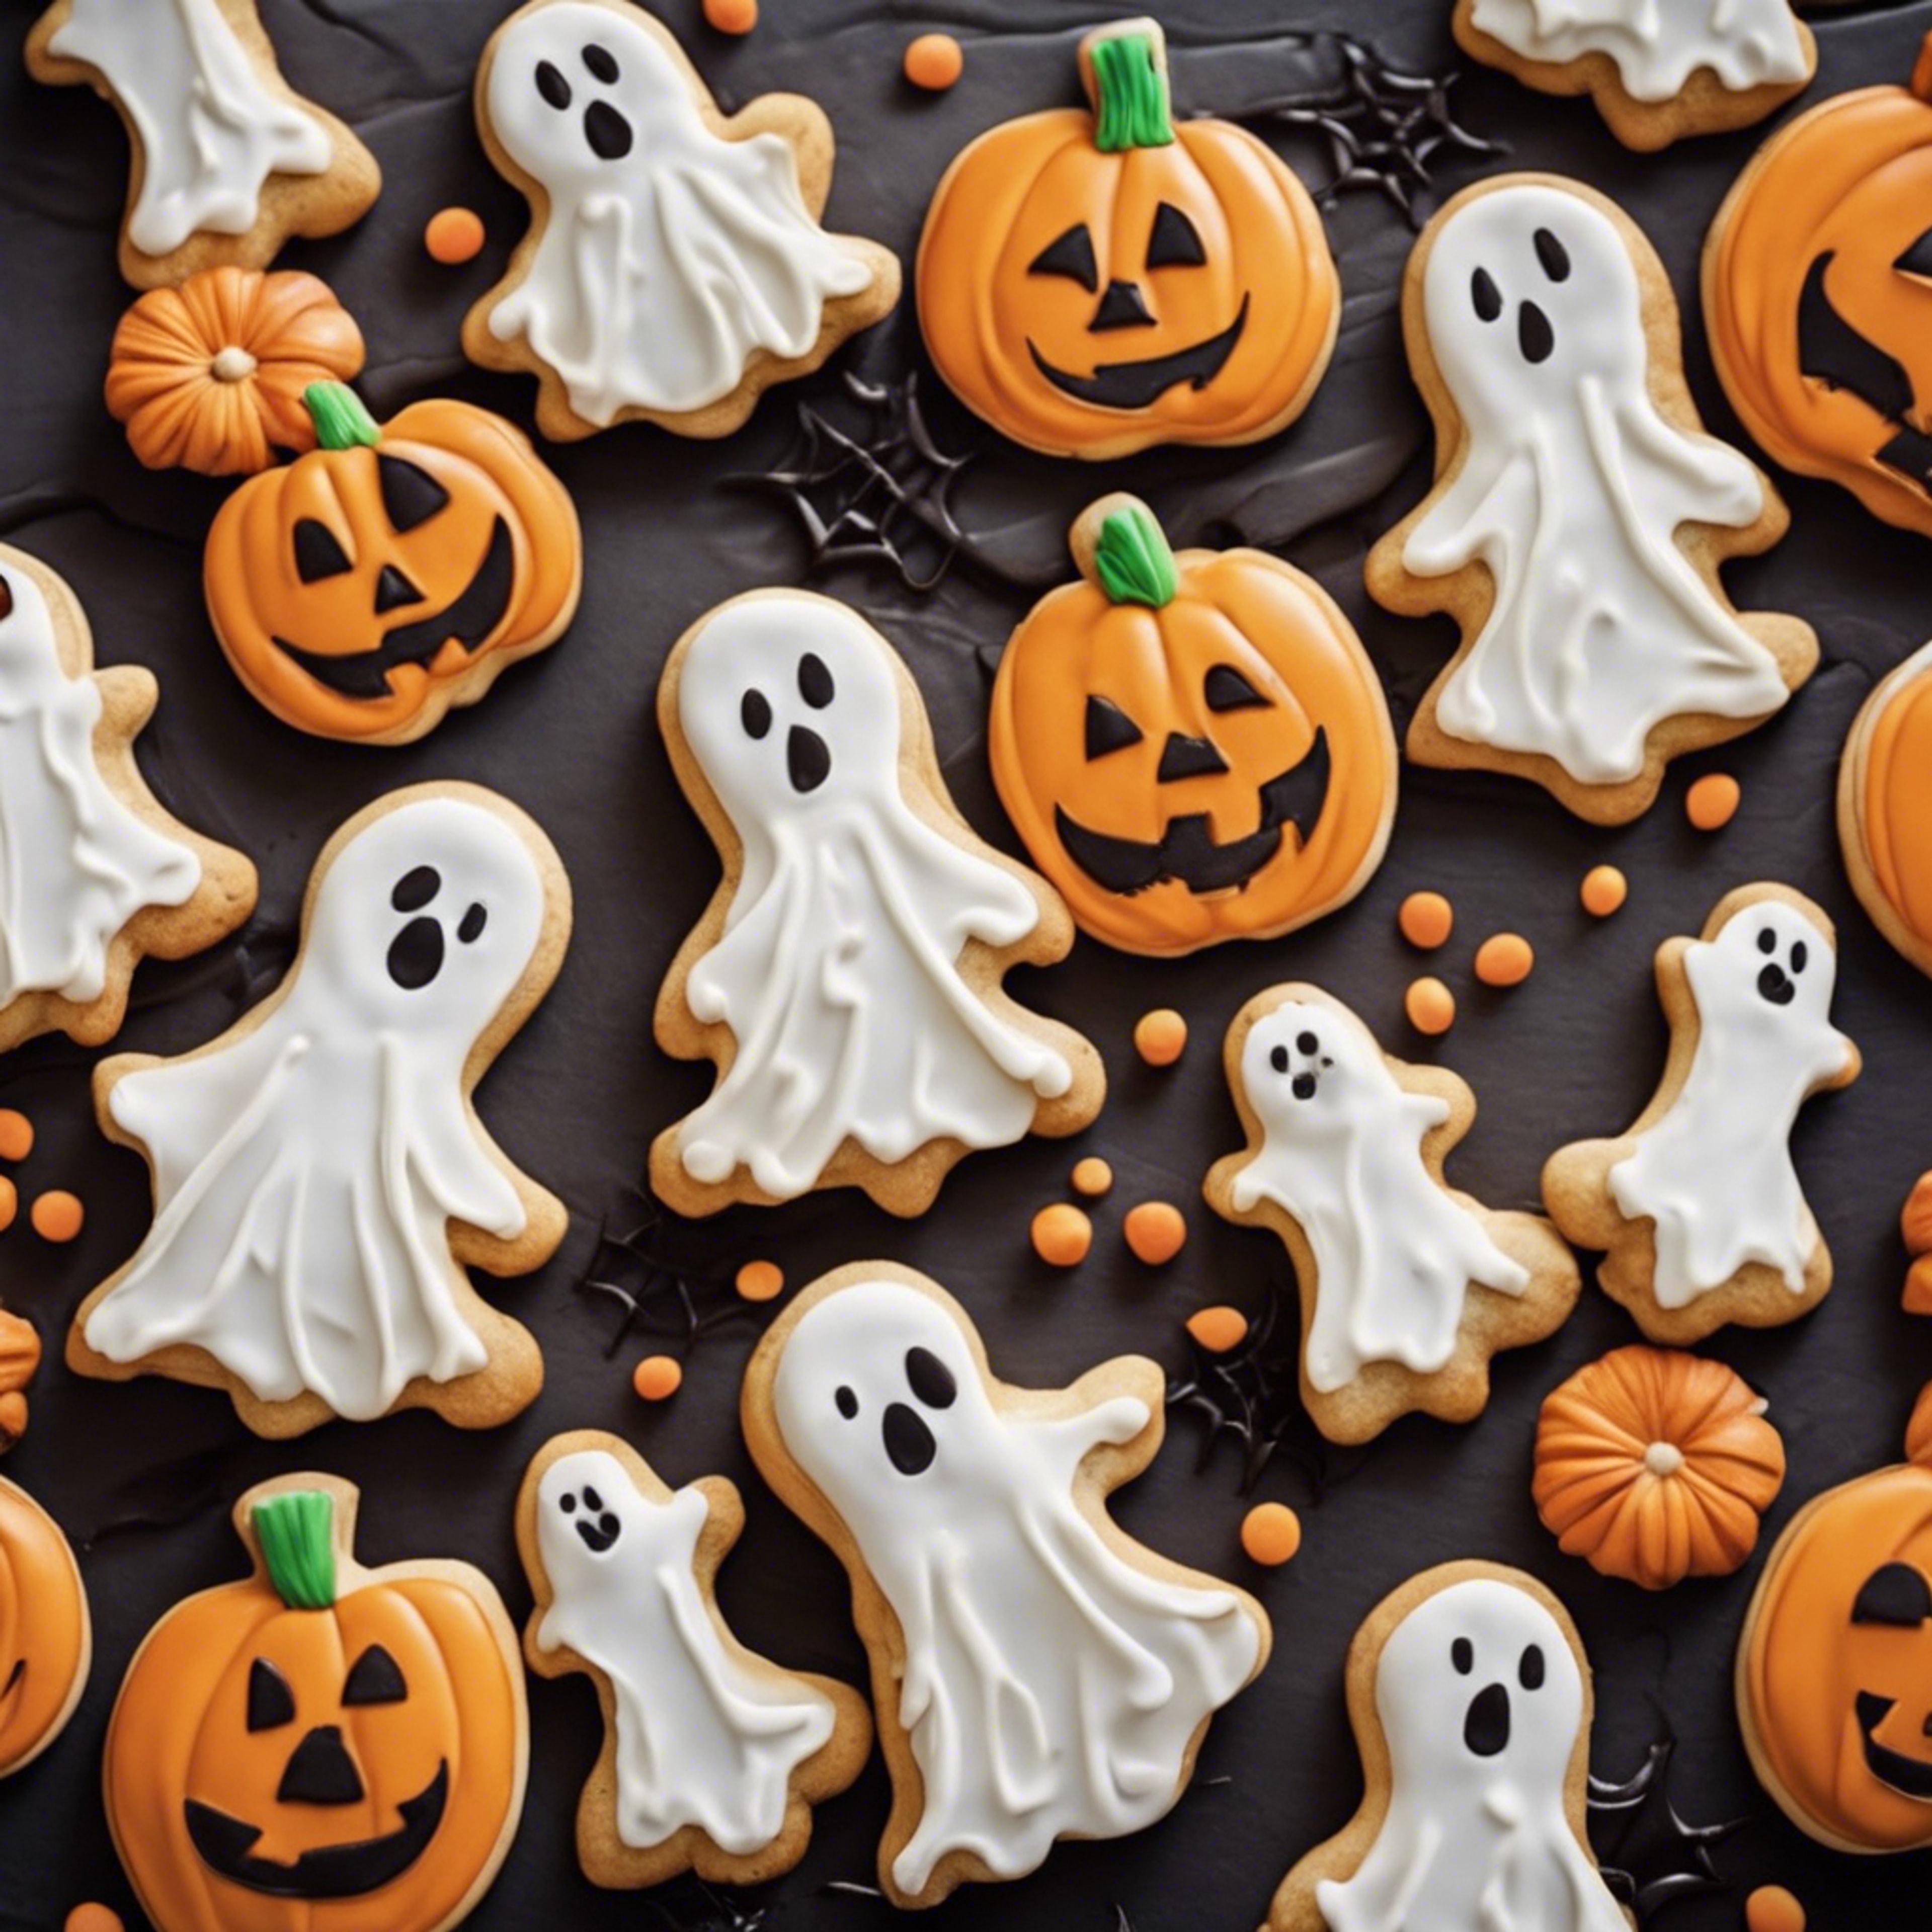 A bakery with a Halloween theme, featuring cookies shaped like ghosts and pumpkins. duvar kağıdı[da61718461044d51ad06]